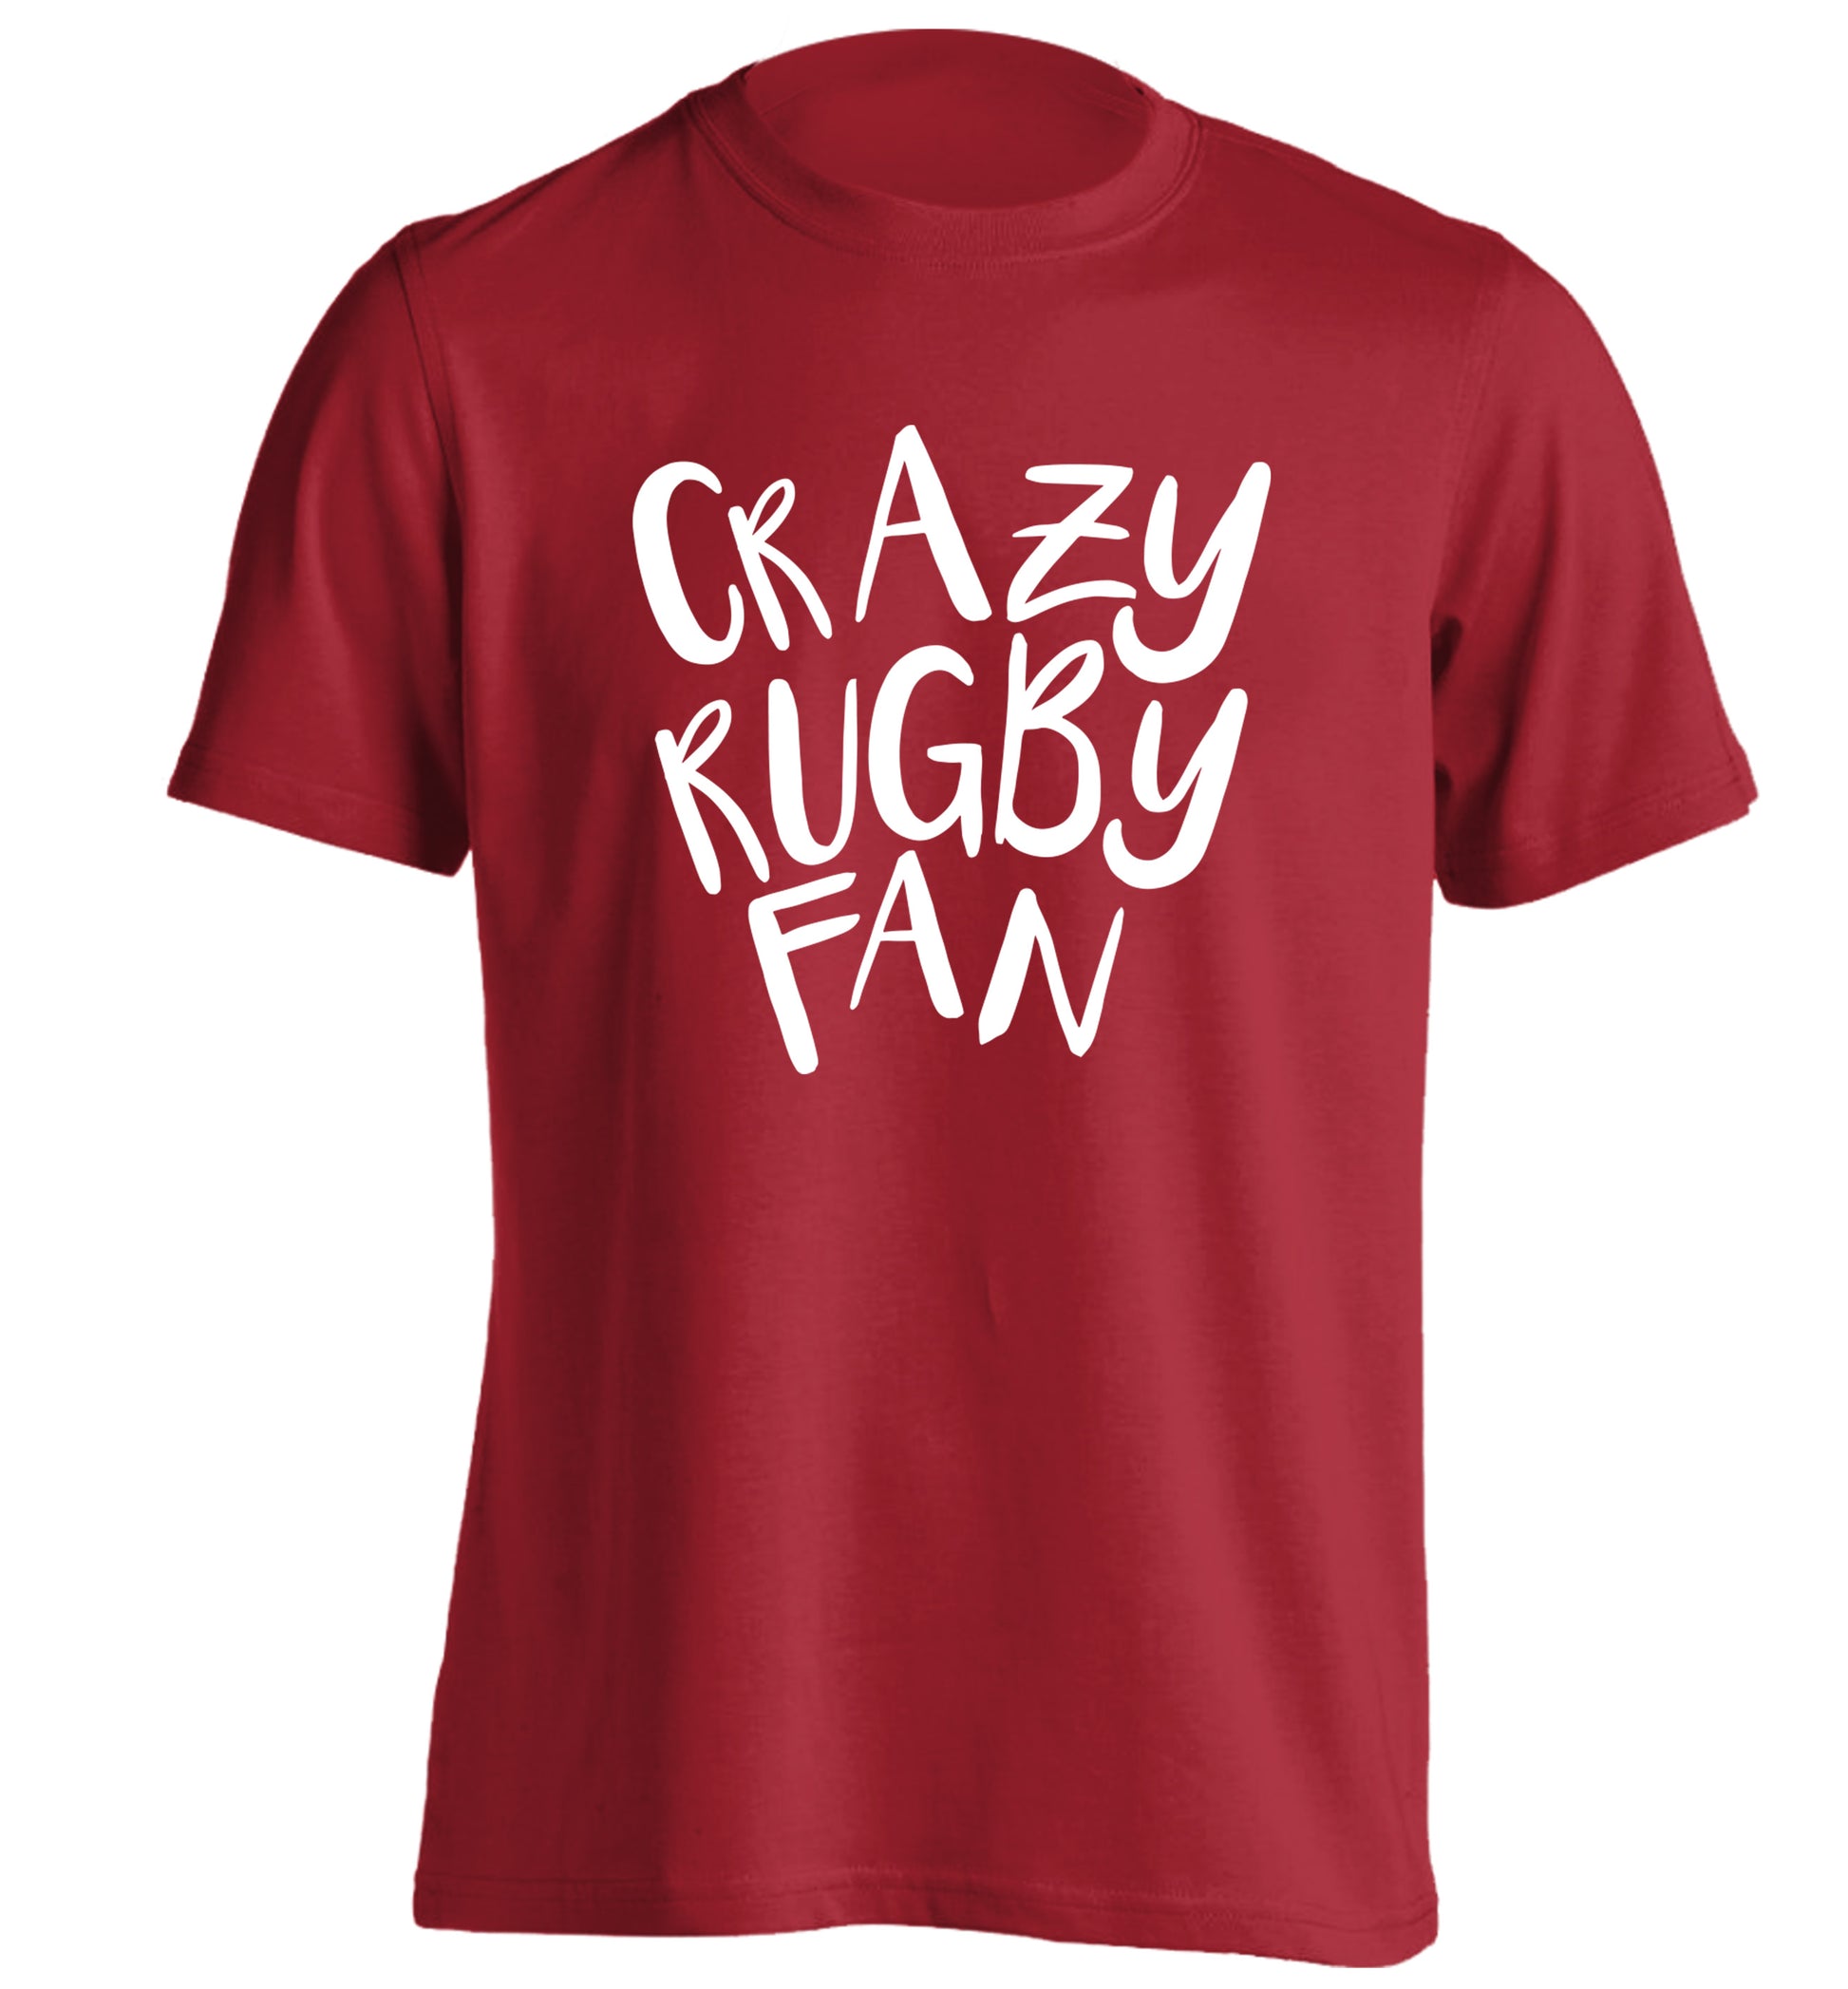 Crazy rugby fan adults unisex red Tshirt 2XL